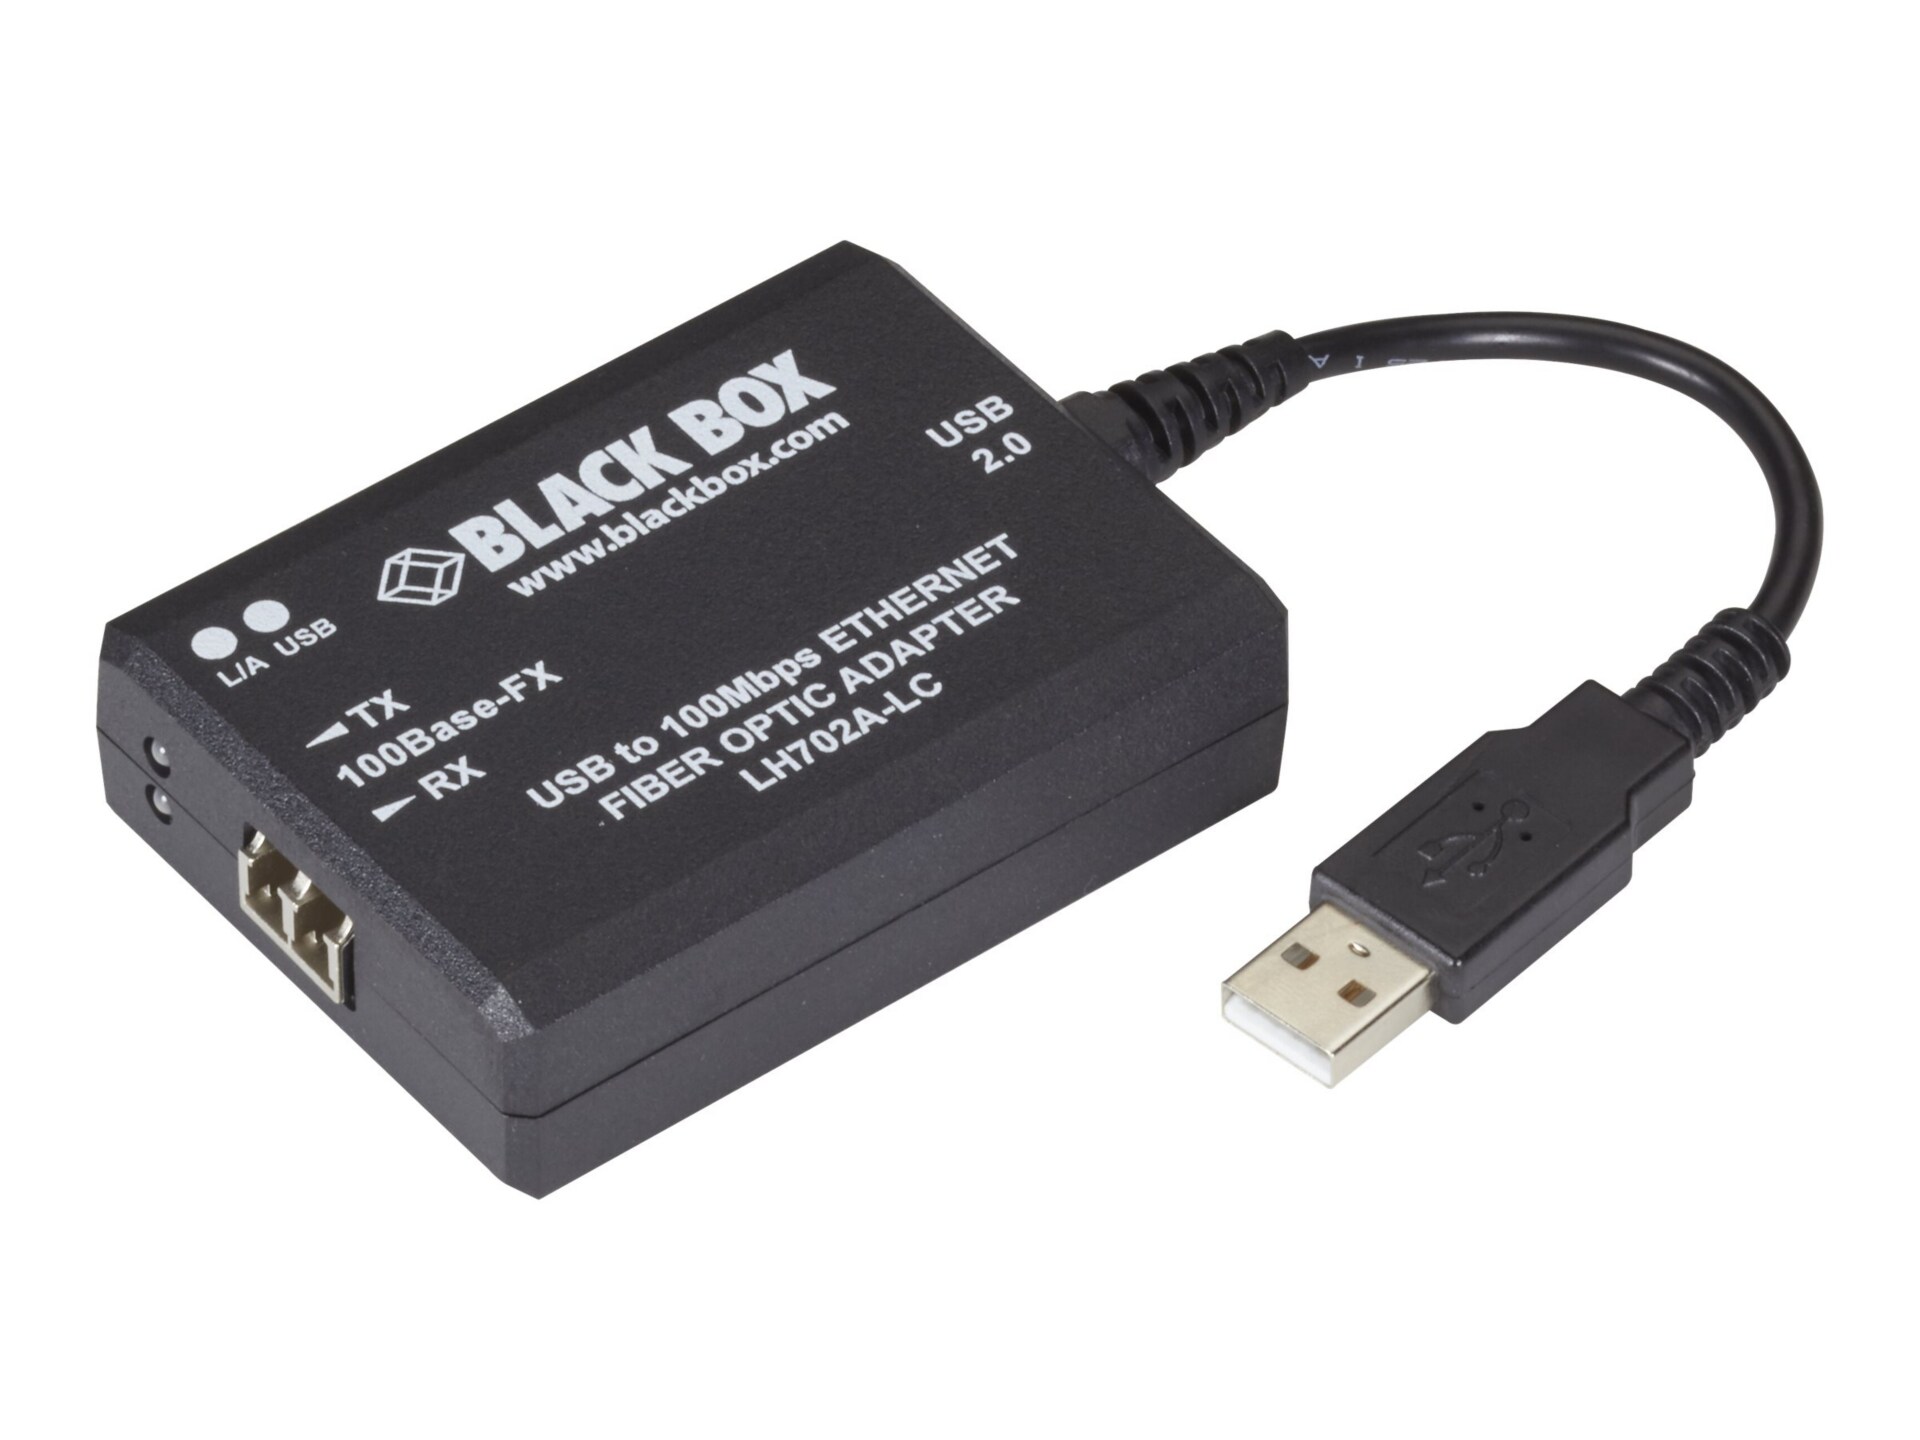 Black Box USB 2.0-to-100BASE-FX Converter - network adapter